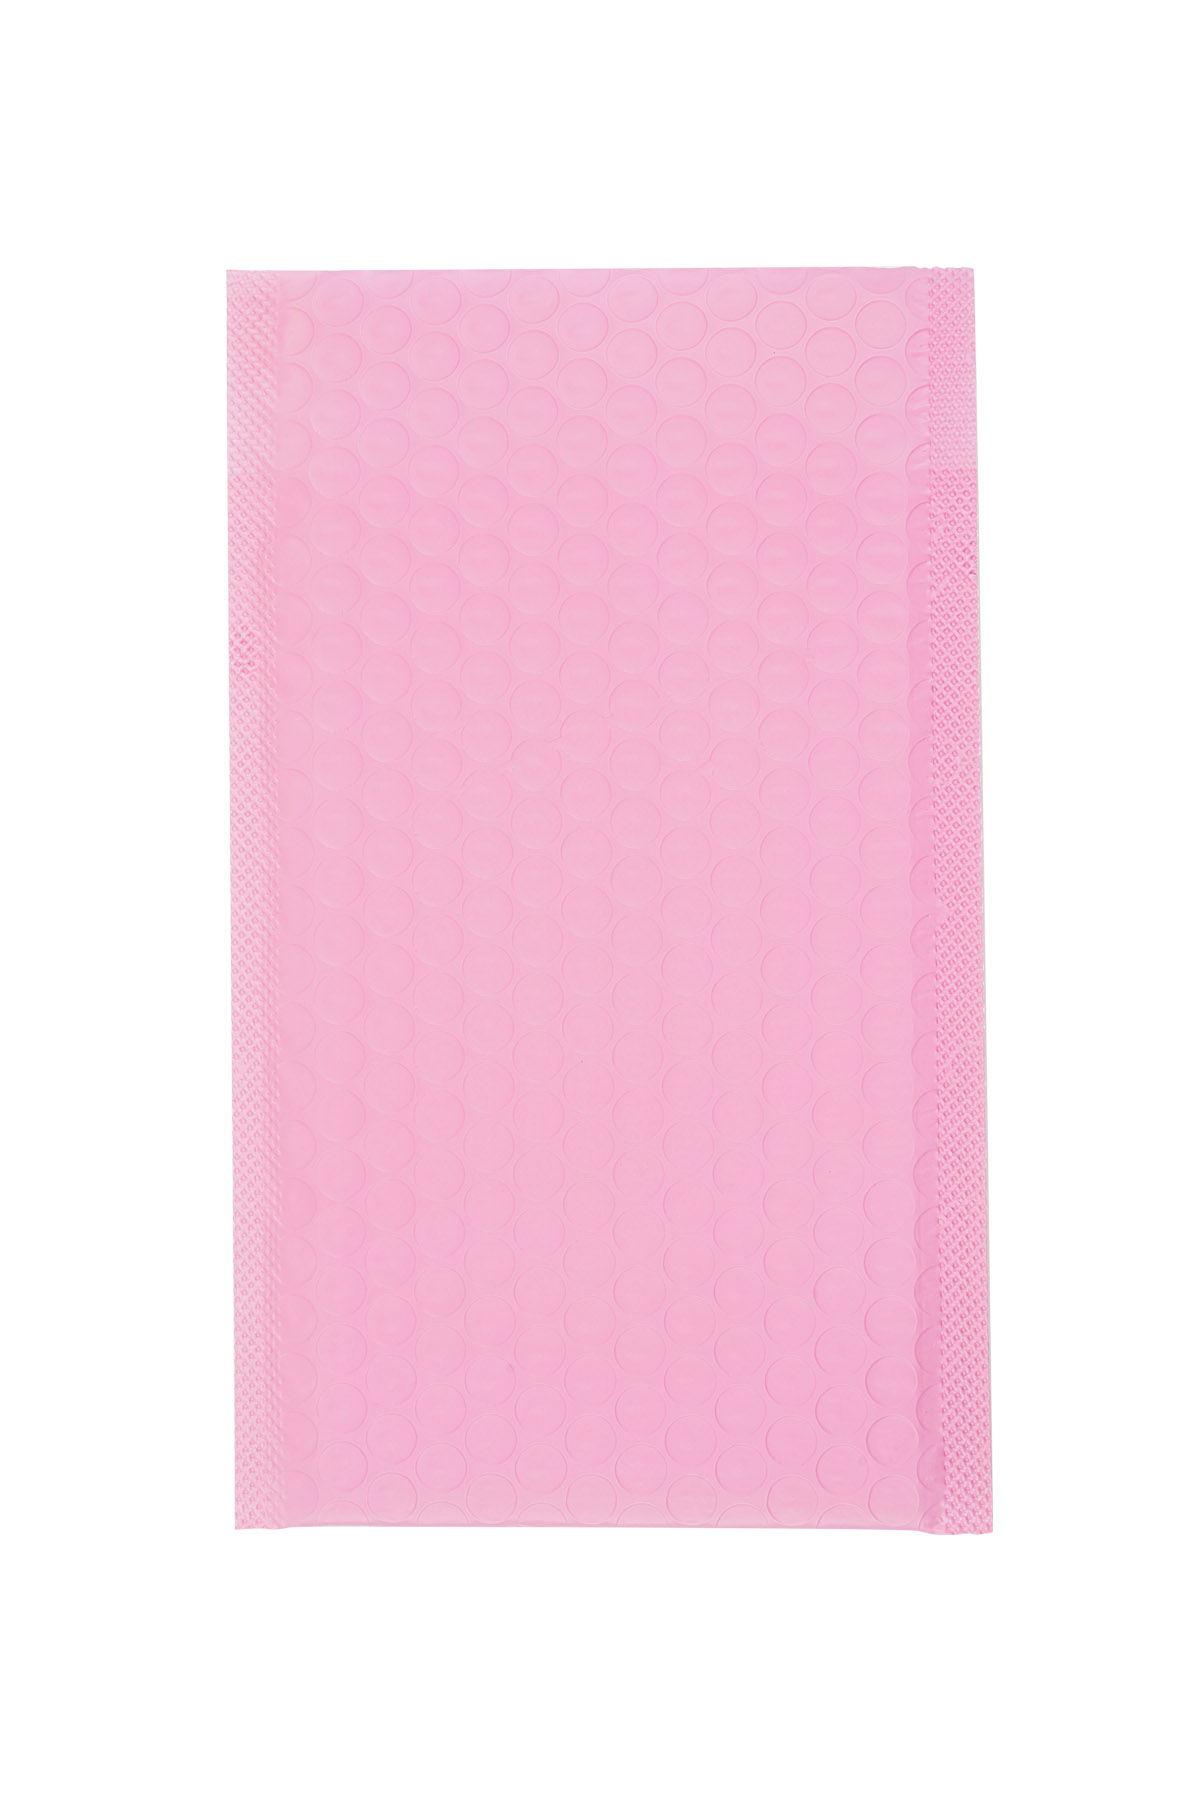 Sac postal bulle - rose pastel Plastique Image2